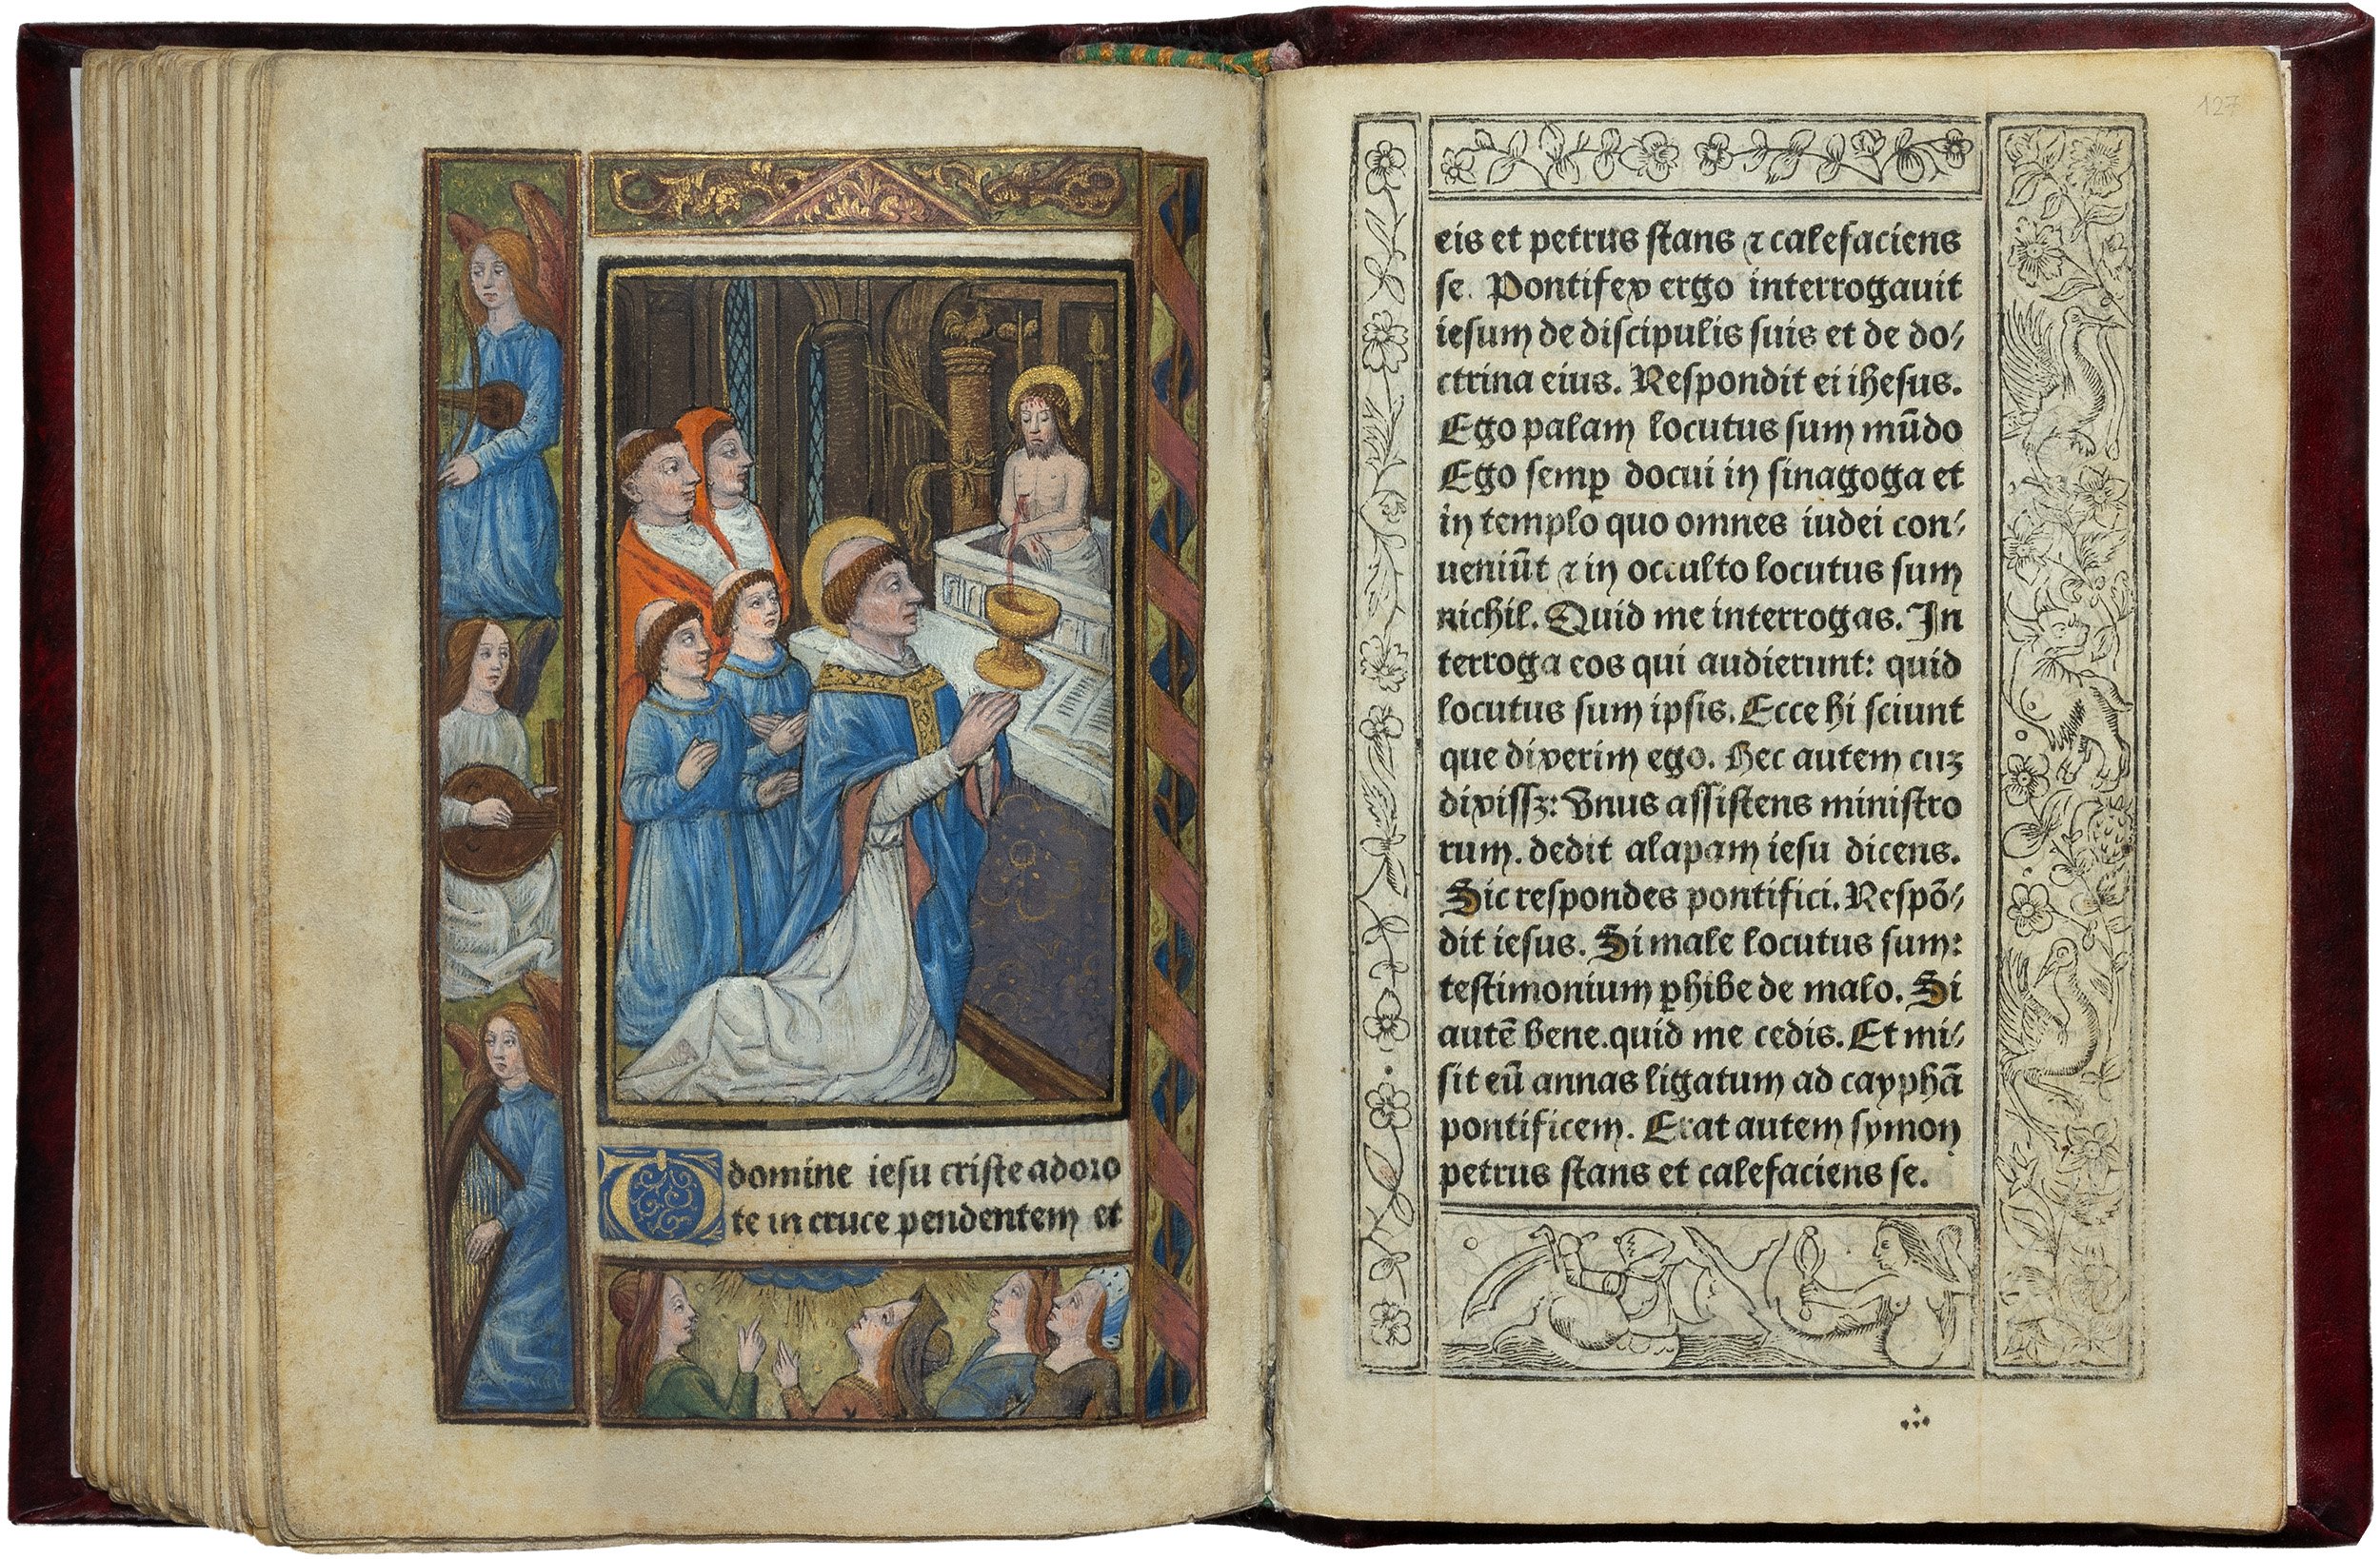 horae-bmv-early-printed-book-of-hours-1487-dupre-128.jpg